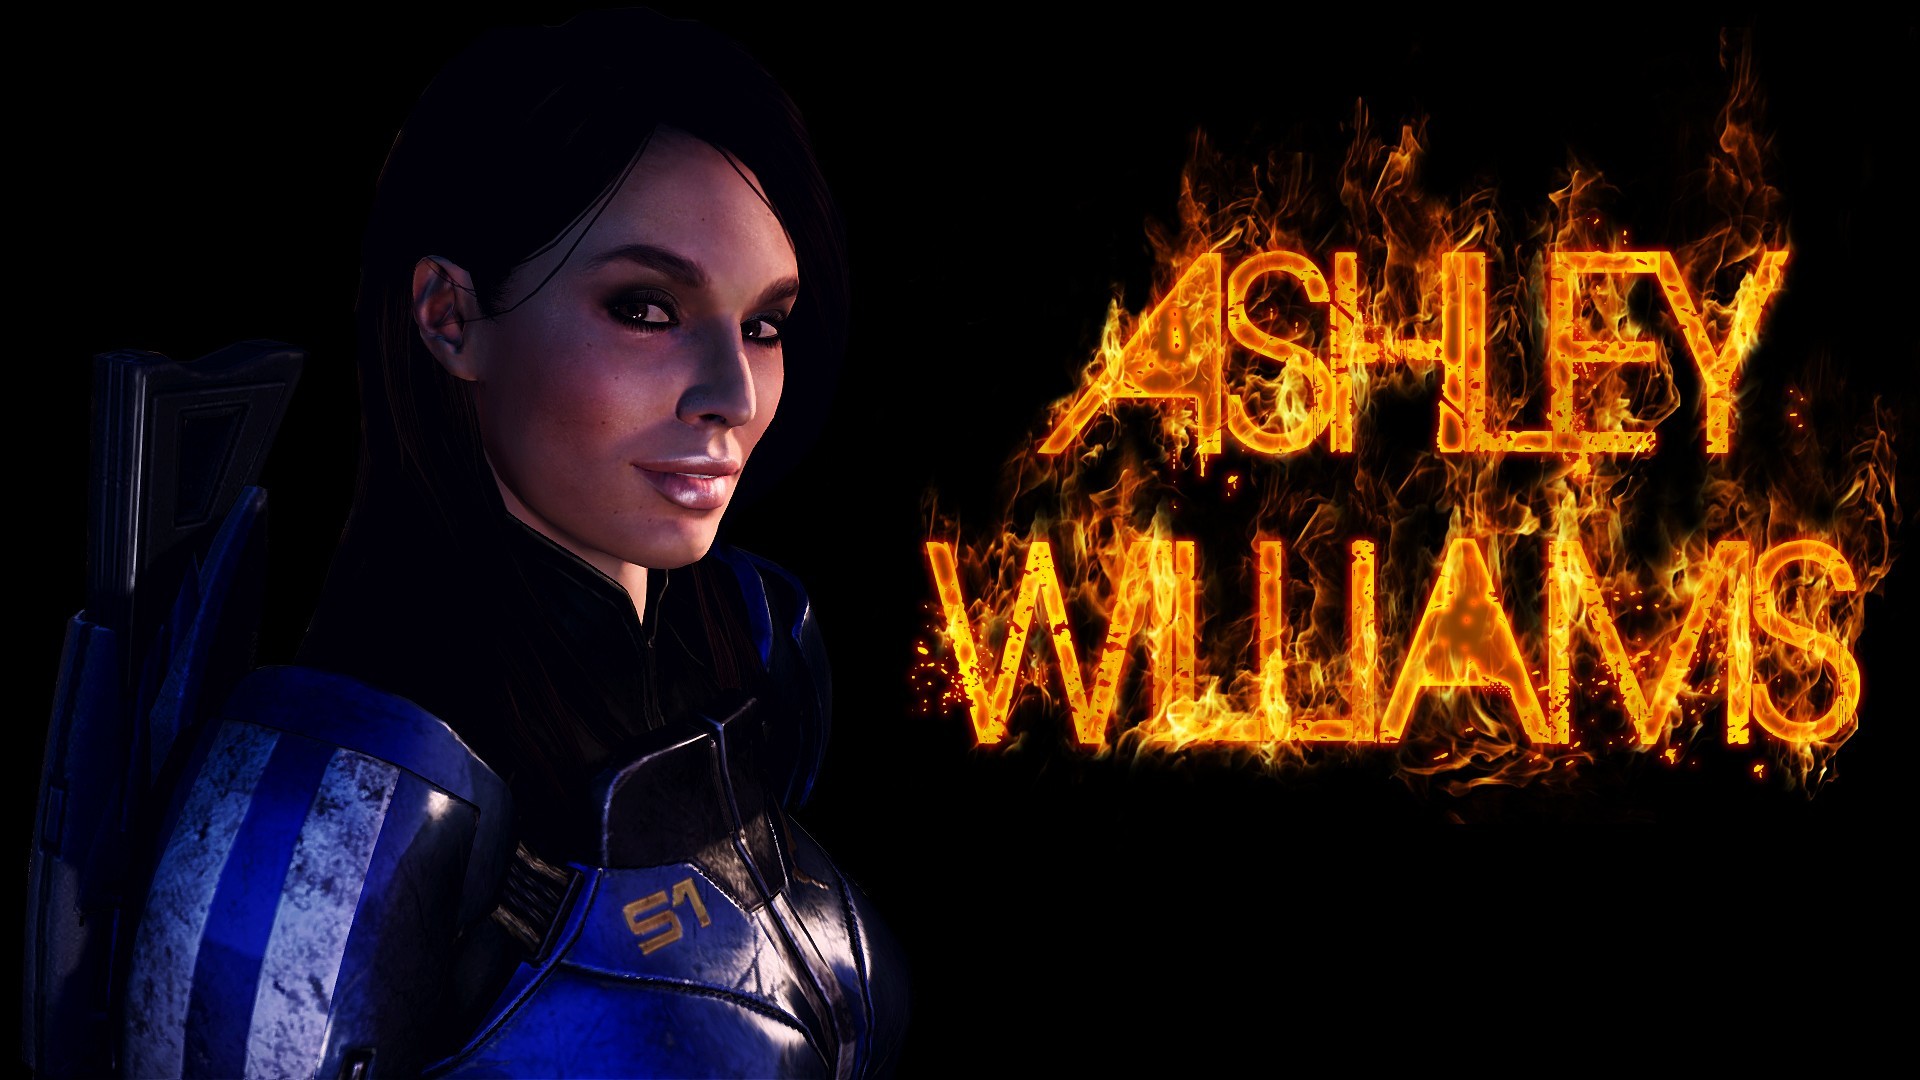 Burning Hot Ashley Williams Wallpaper Images, Photos, Reviews